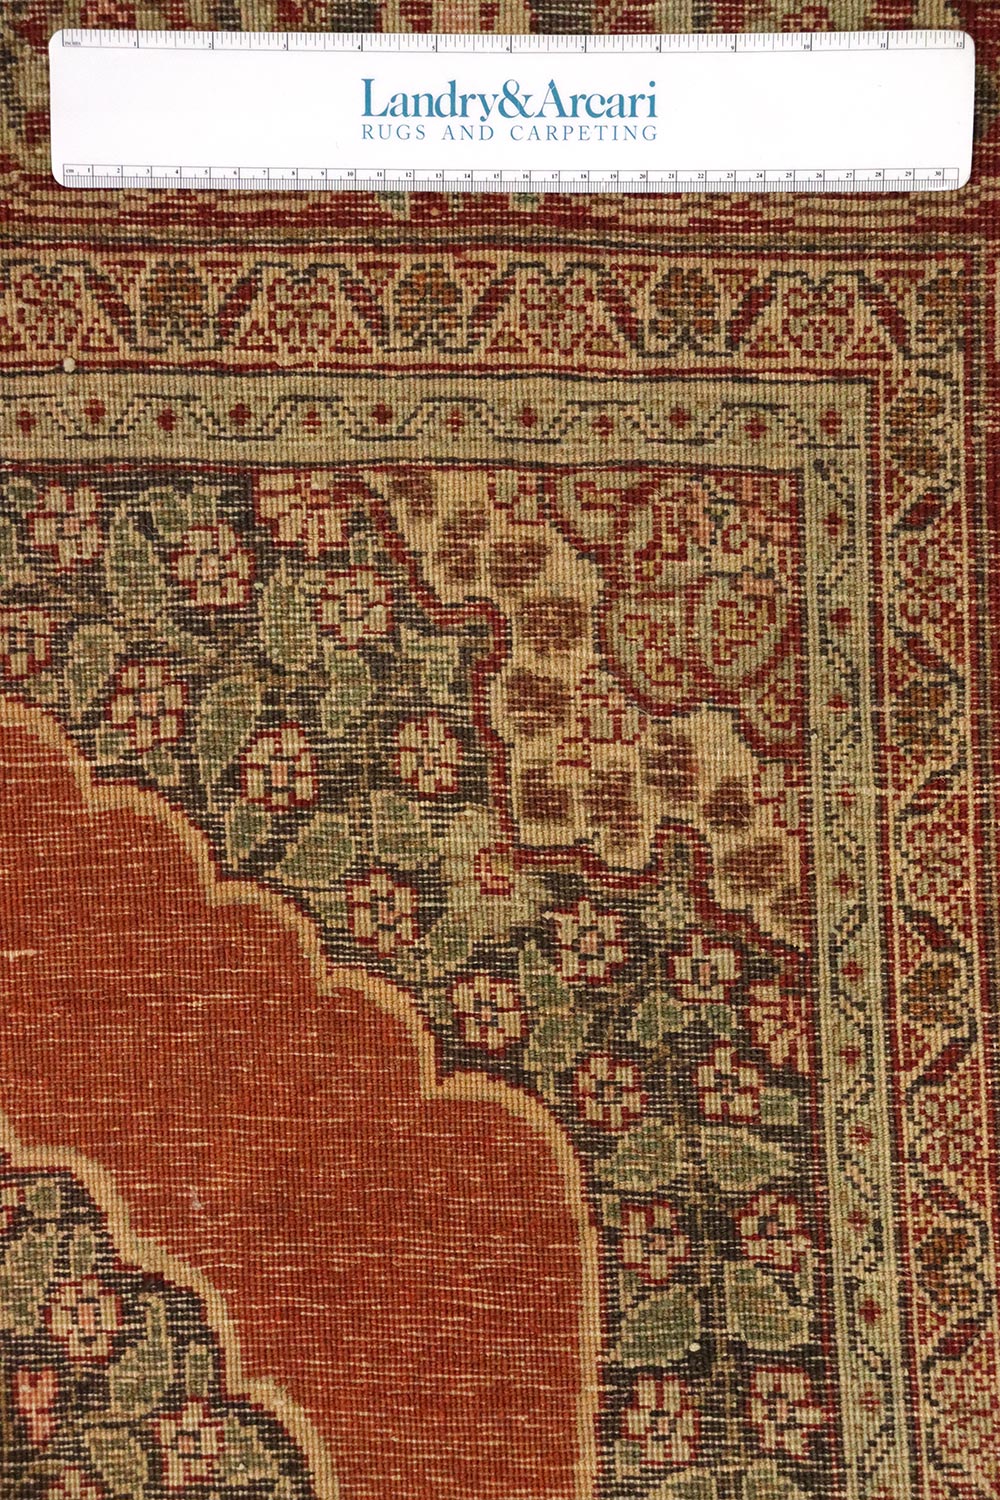 Antique Haji Jalili Tabriz Handwoven Traditional Rug, J65770